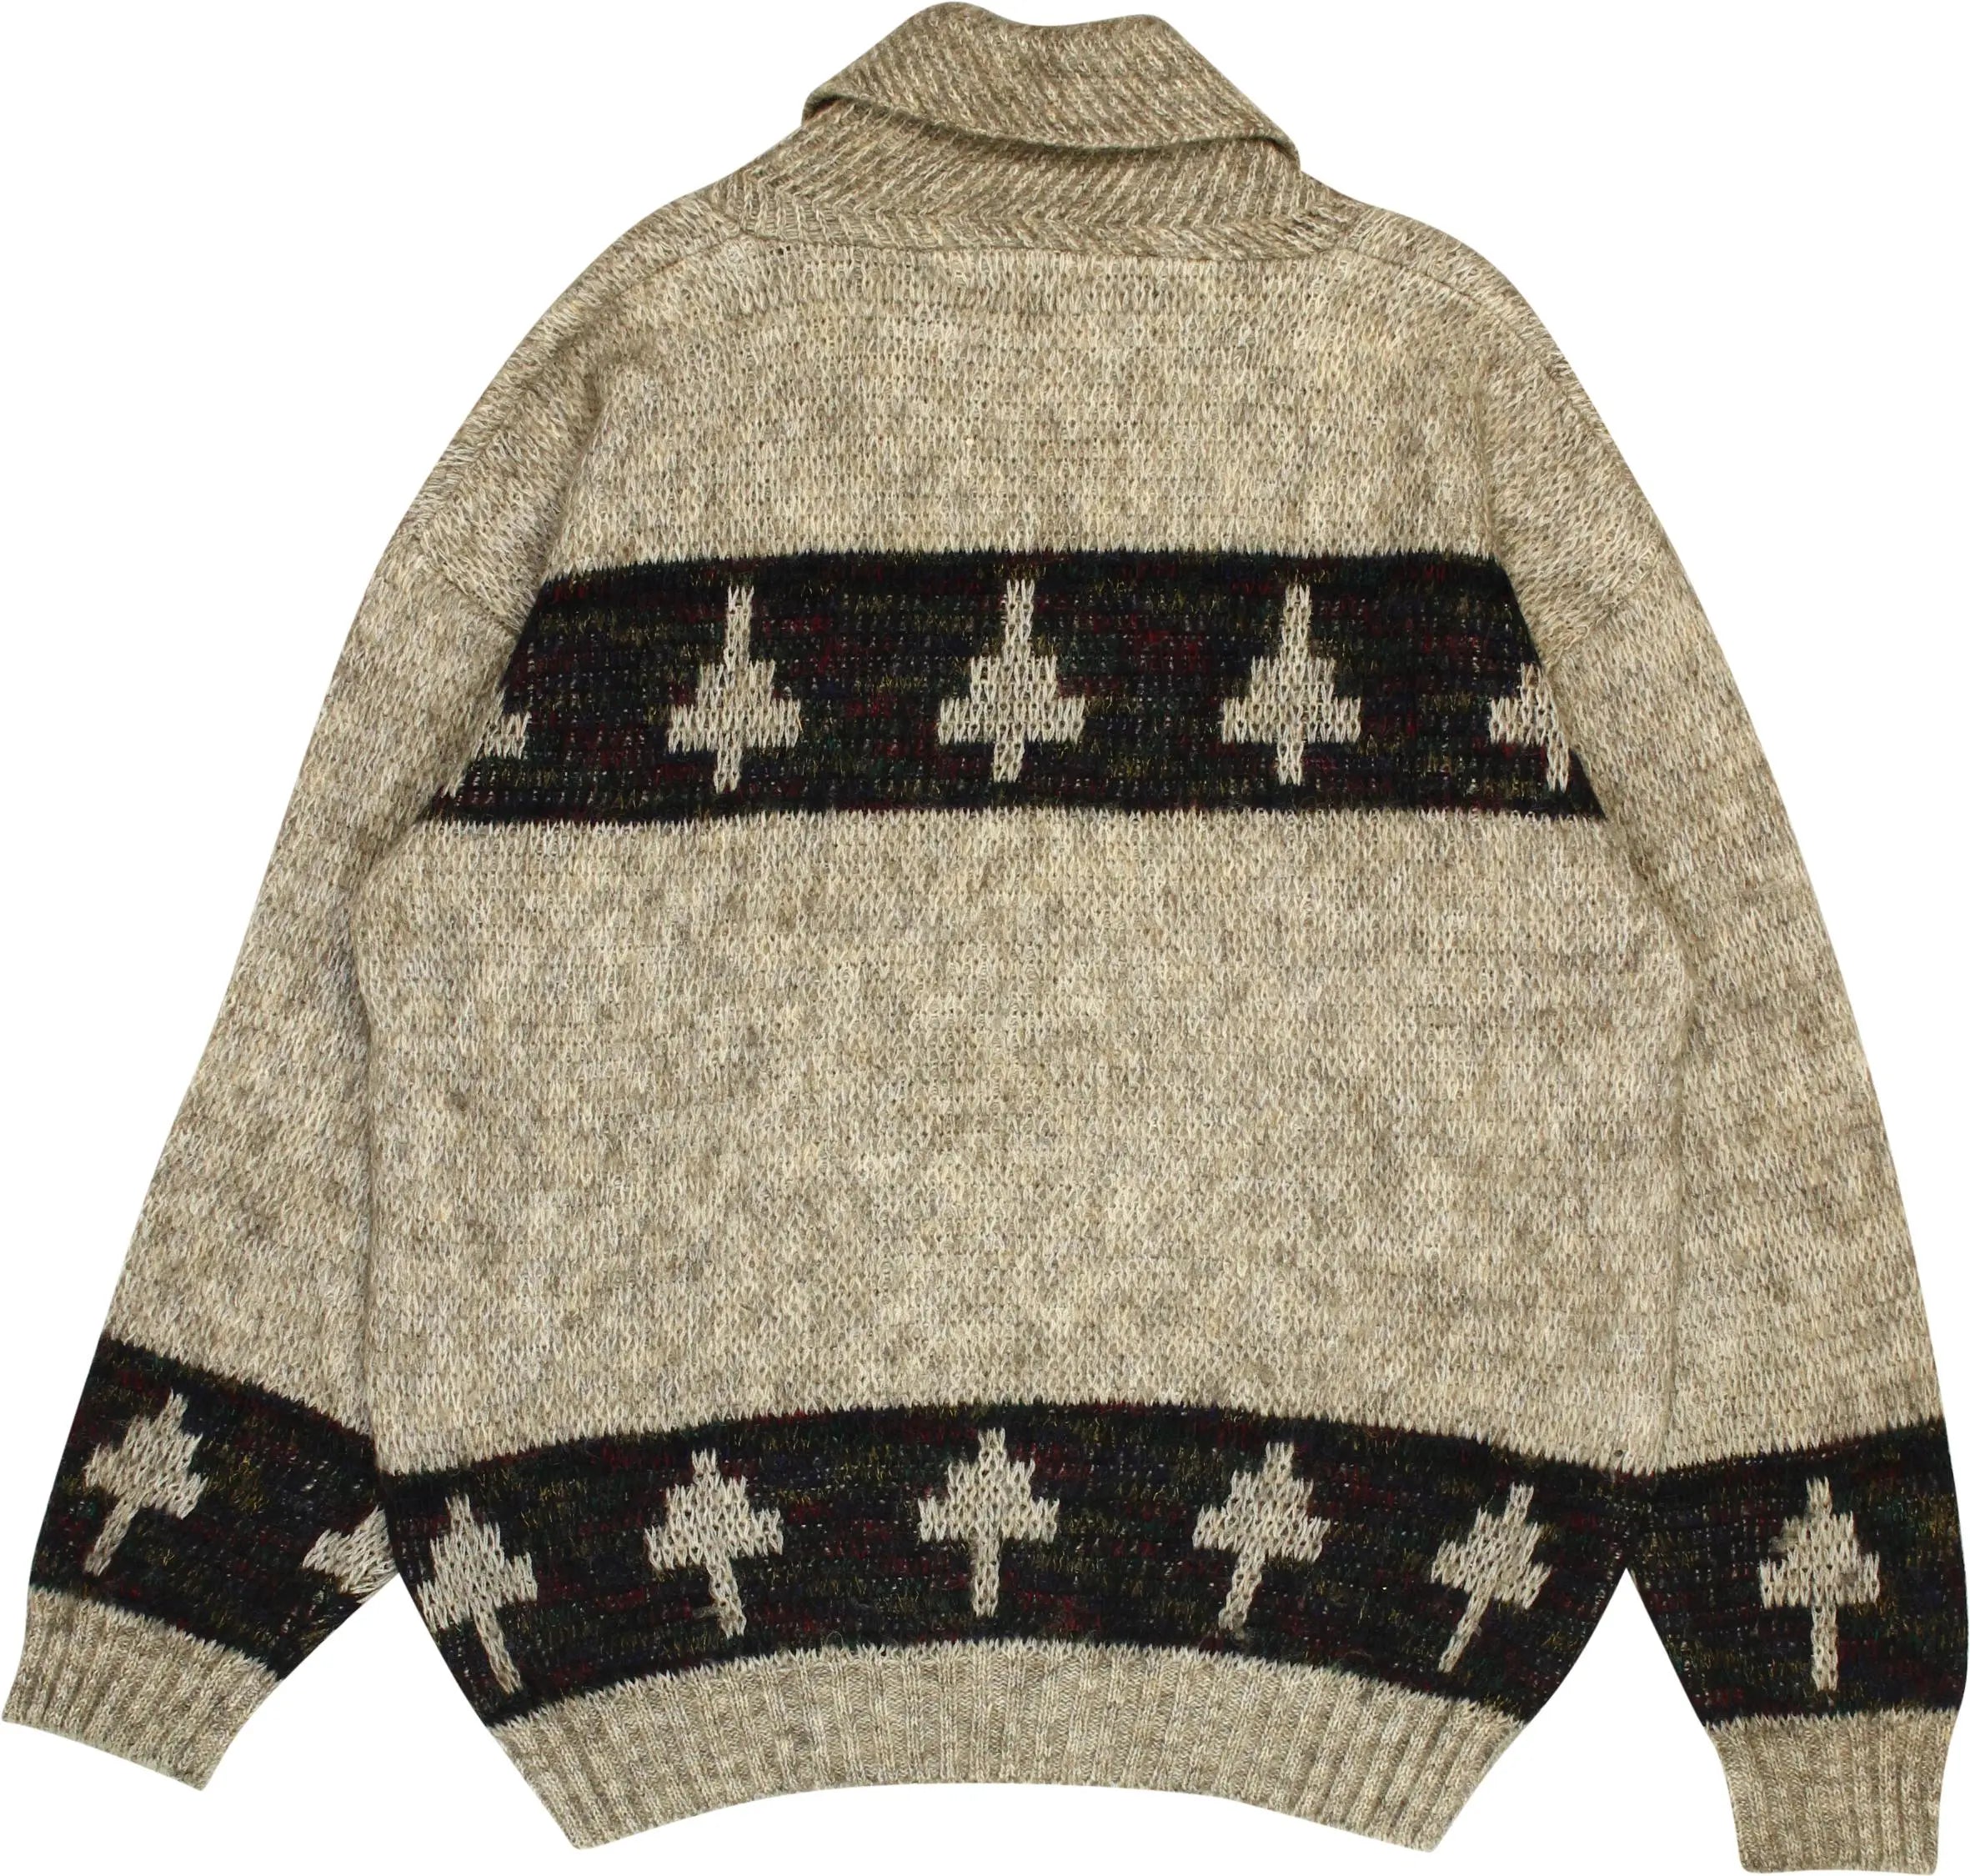 Chustpol - Wool Patterned Jumper- ThriftTale.com - Vintage and second handclothing